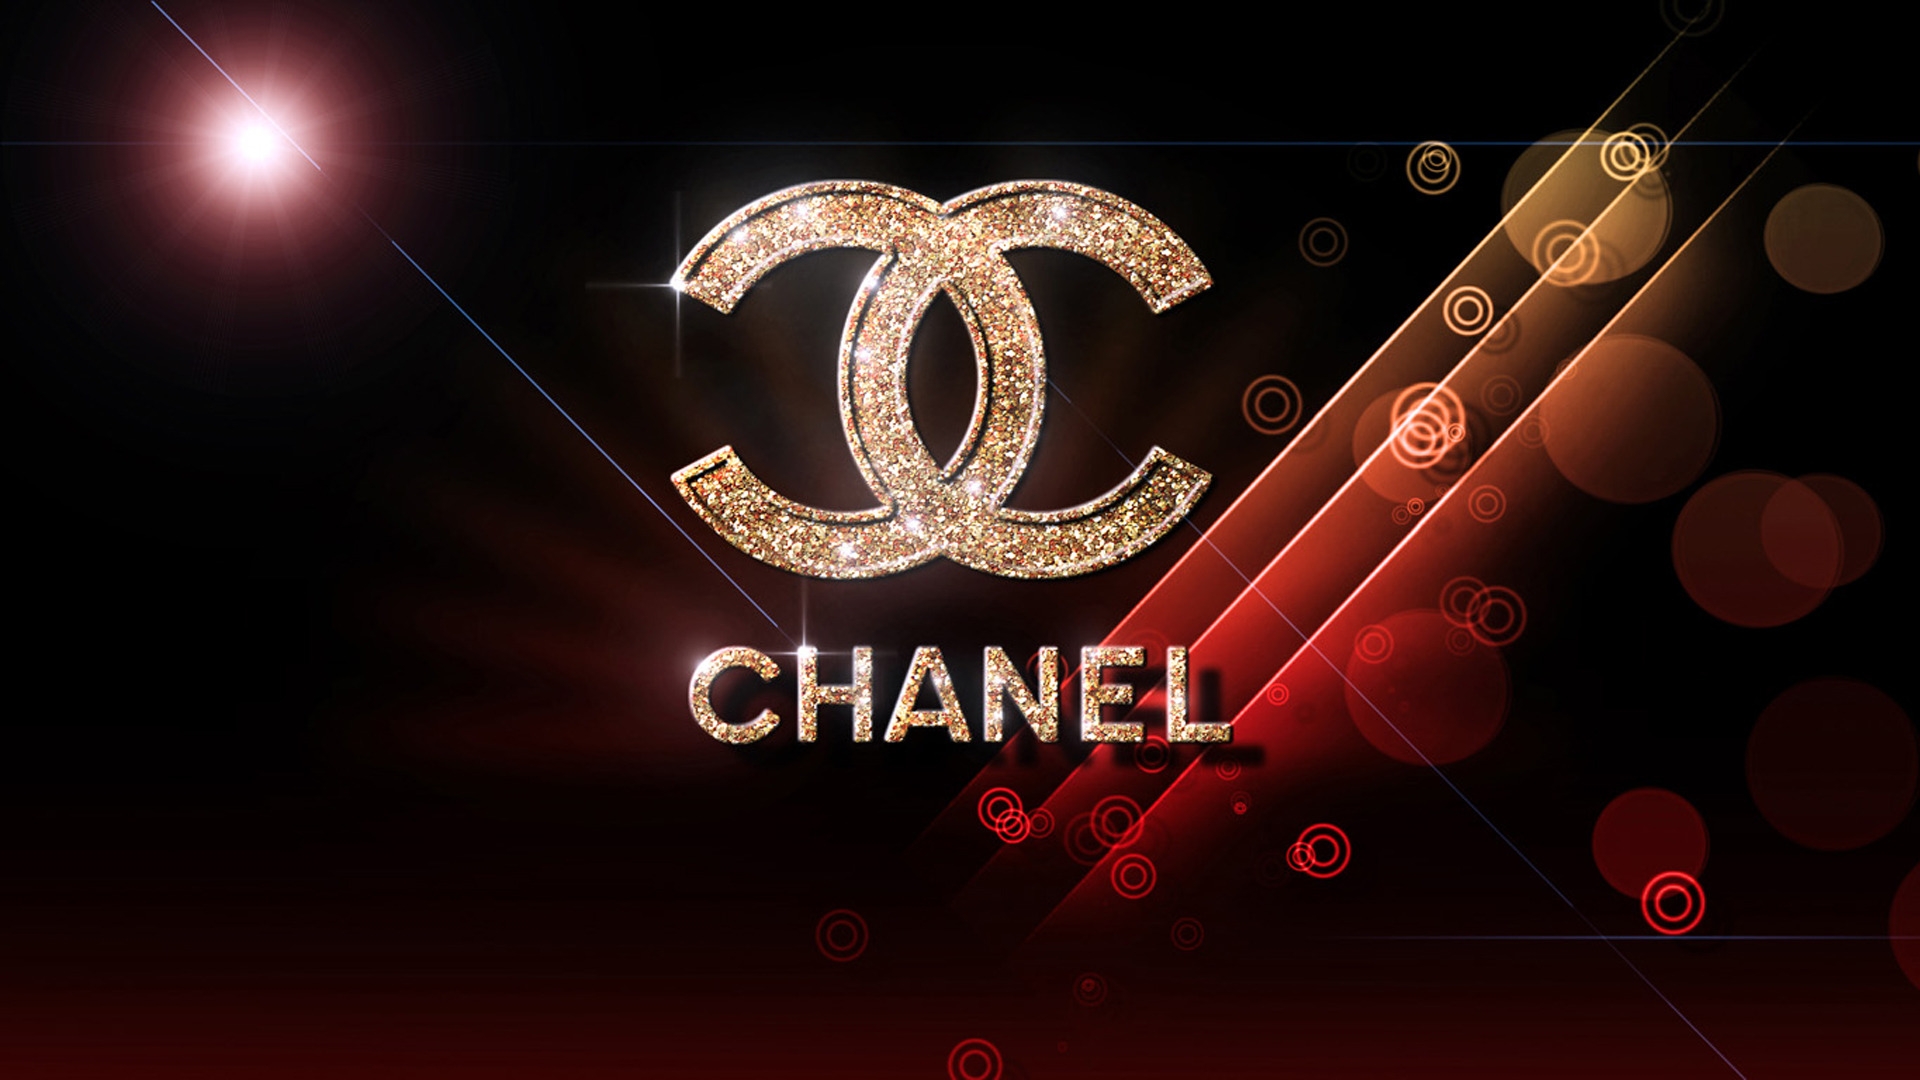 Chanel Logo for 1920 x 1080 HDTV 1080p resolution